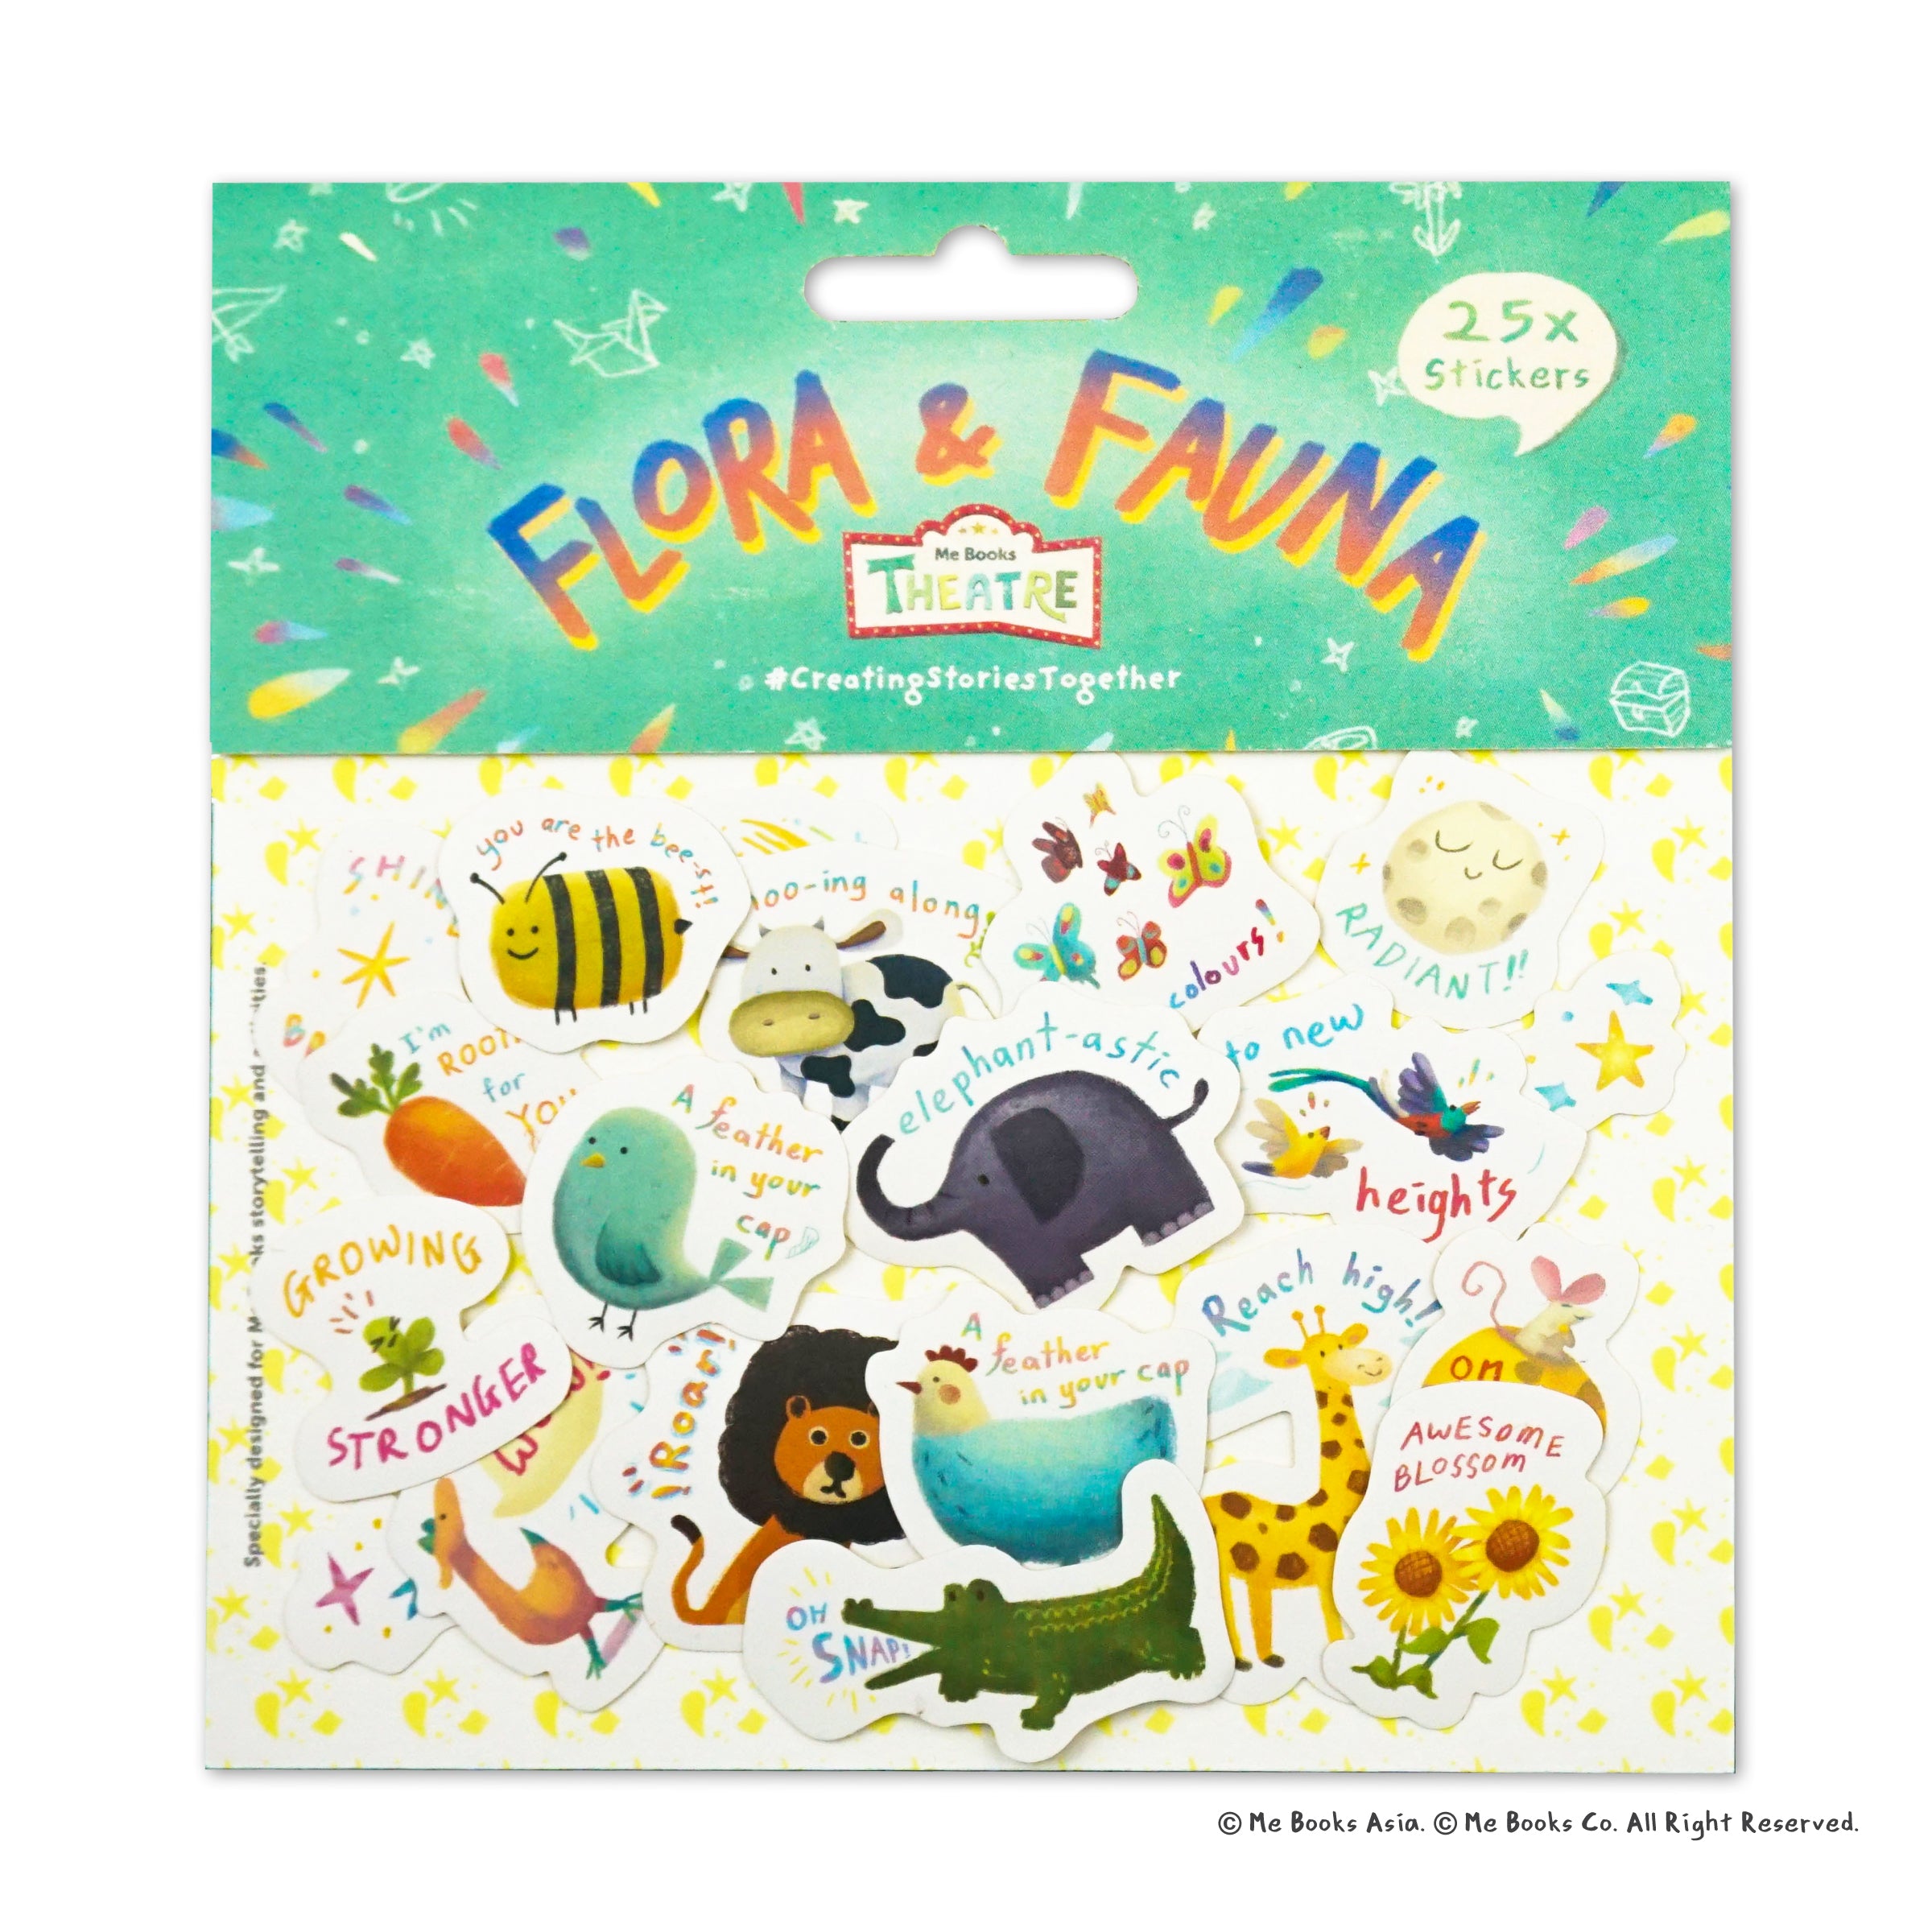 Me Books Theatre Stickers: Floral & Fauna - Me Books Asia Store